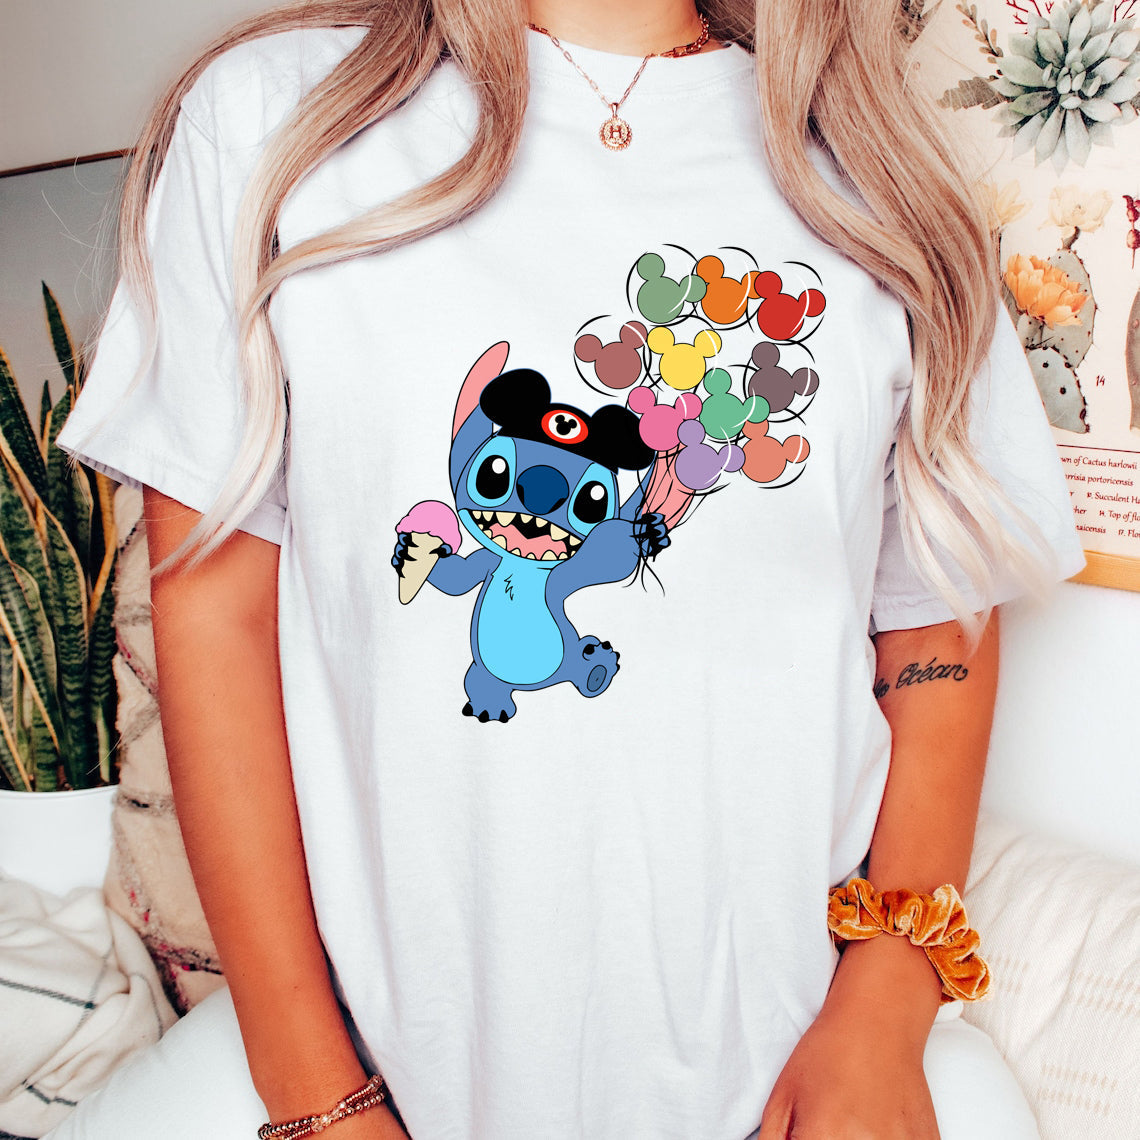 Stitch Shirt PNG Design, Star Wars Shirt PNG, Stitch, Disney Stitch PNG, Universal Studio Shirt PNG, Family Vacation Shirt PNG, Disney Shirt PNG - VartDigitals